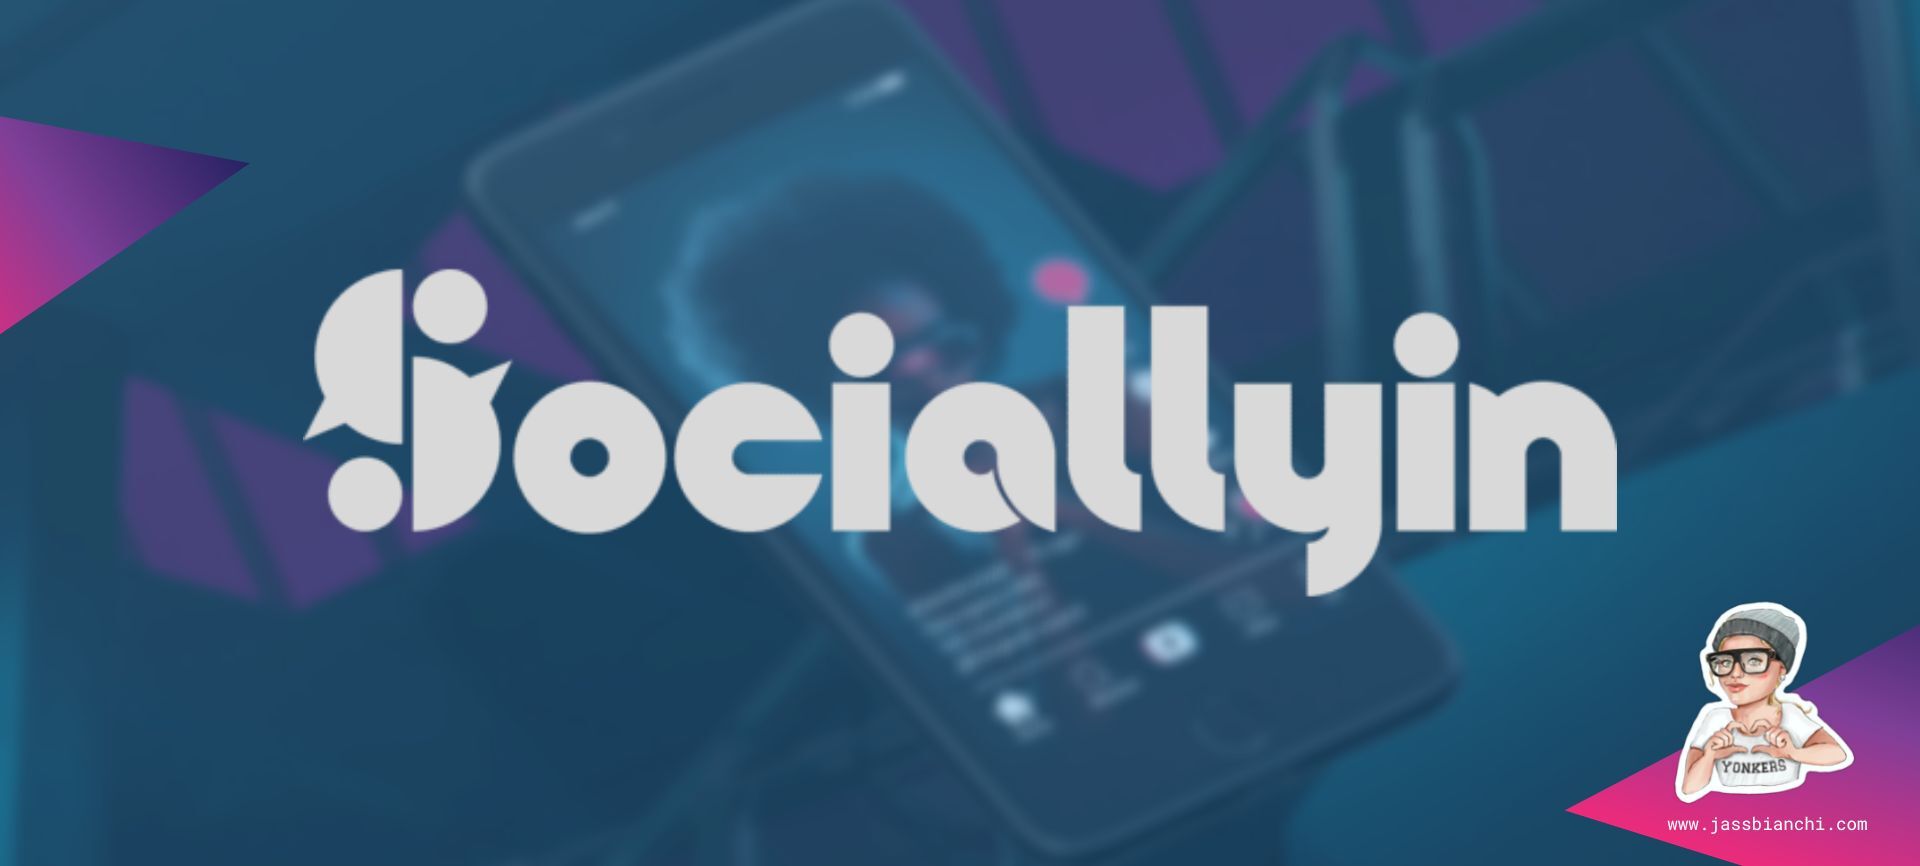 Sociallyin a Social Media Resource for Musicians